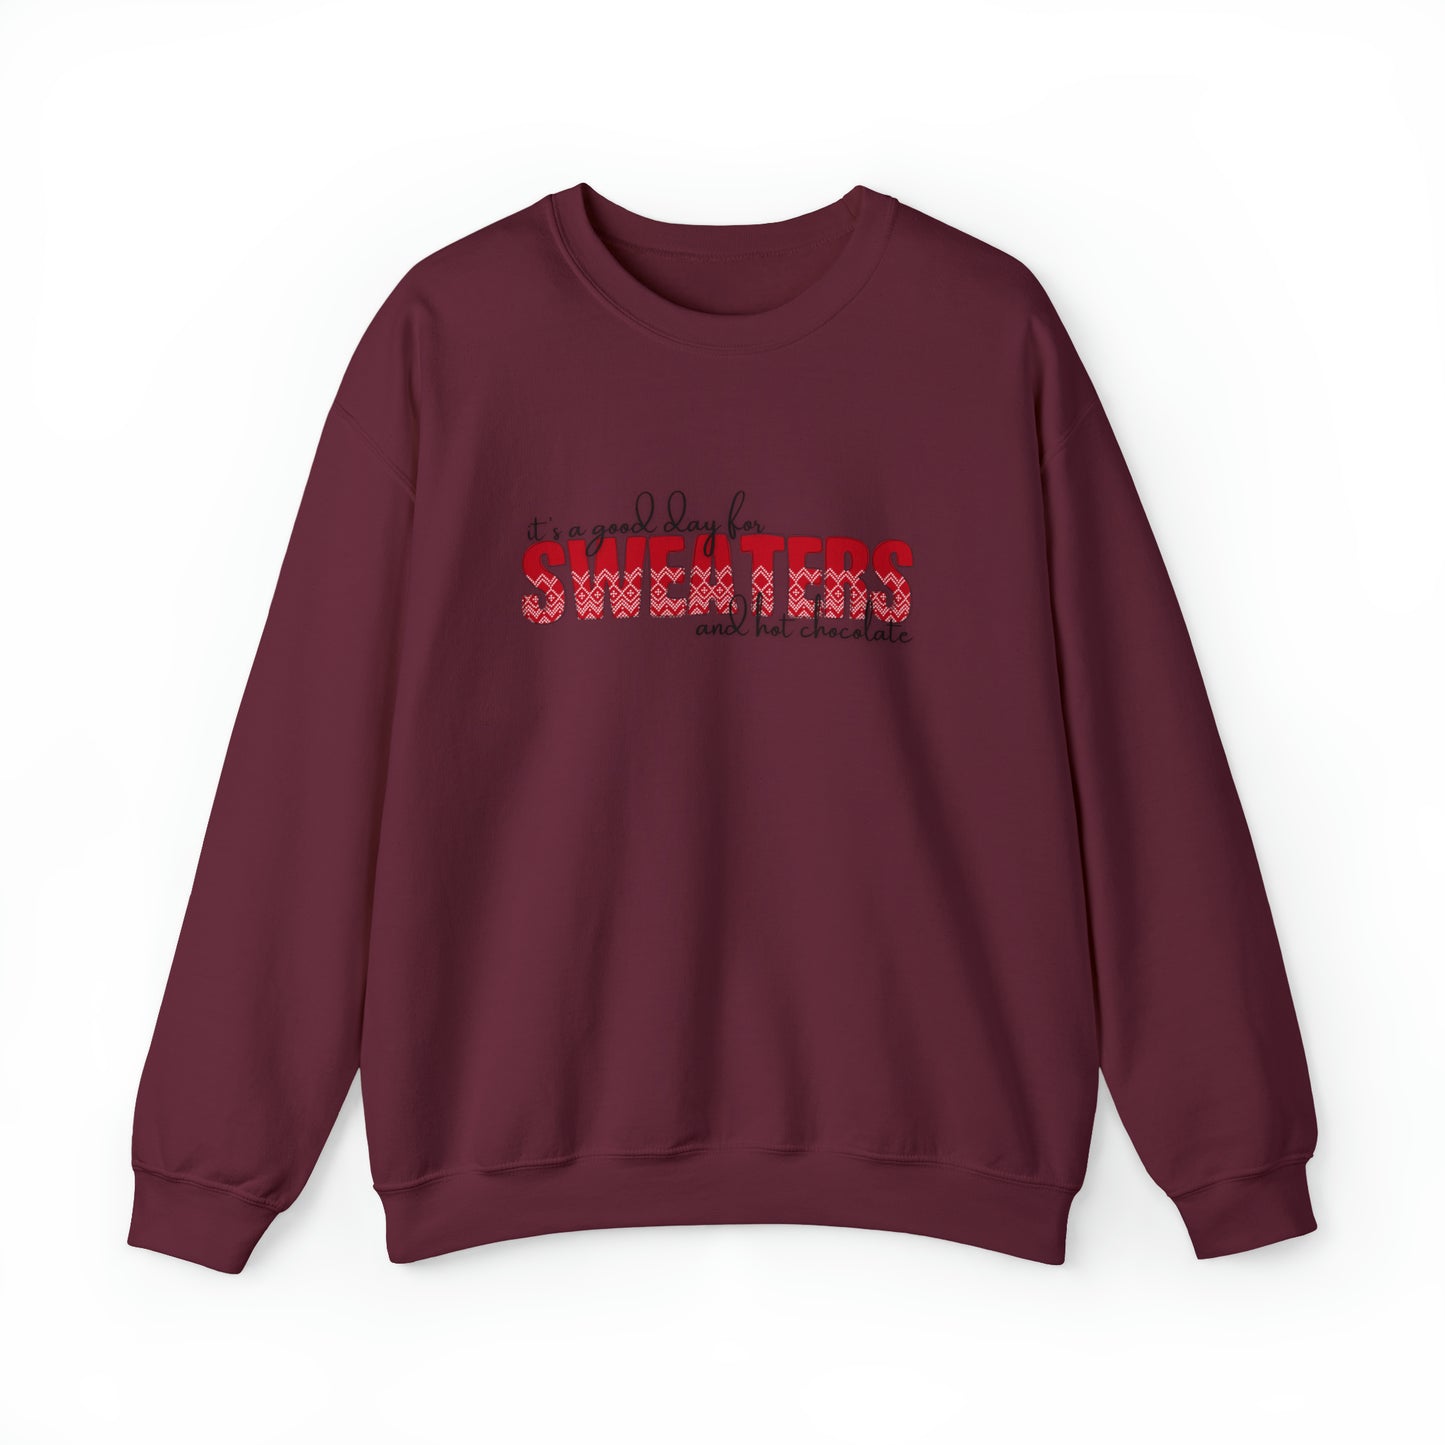 Sweaters and Hot Chocolate Christmas Sweatshirt